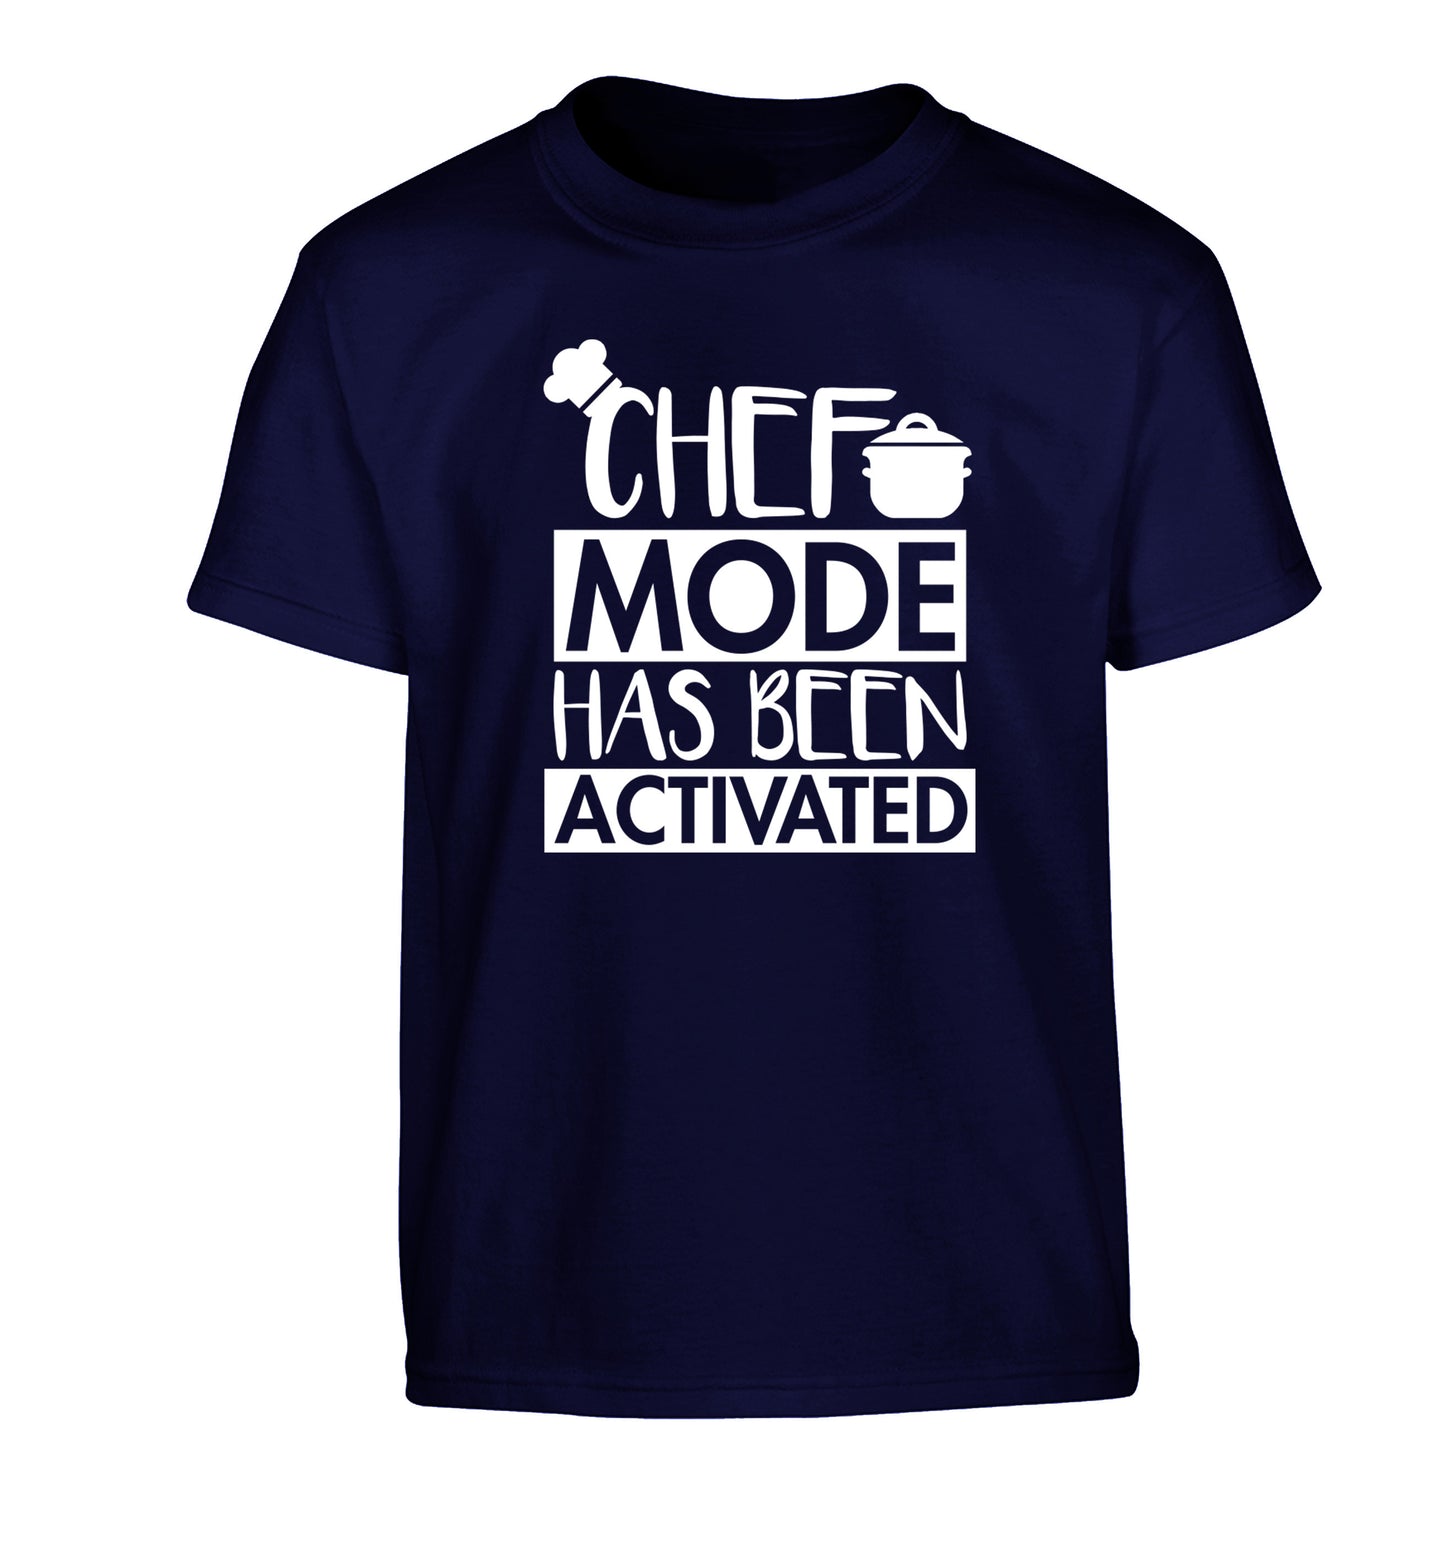 Chef mode has been activated Children's navy Tshirt 12-14 Years